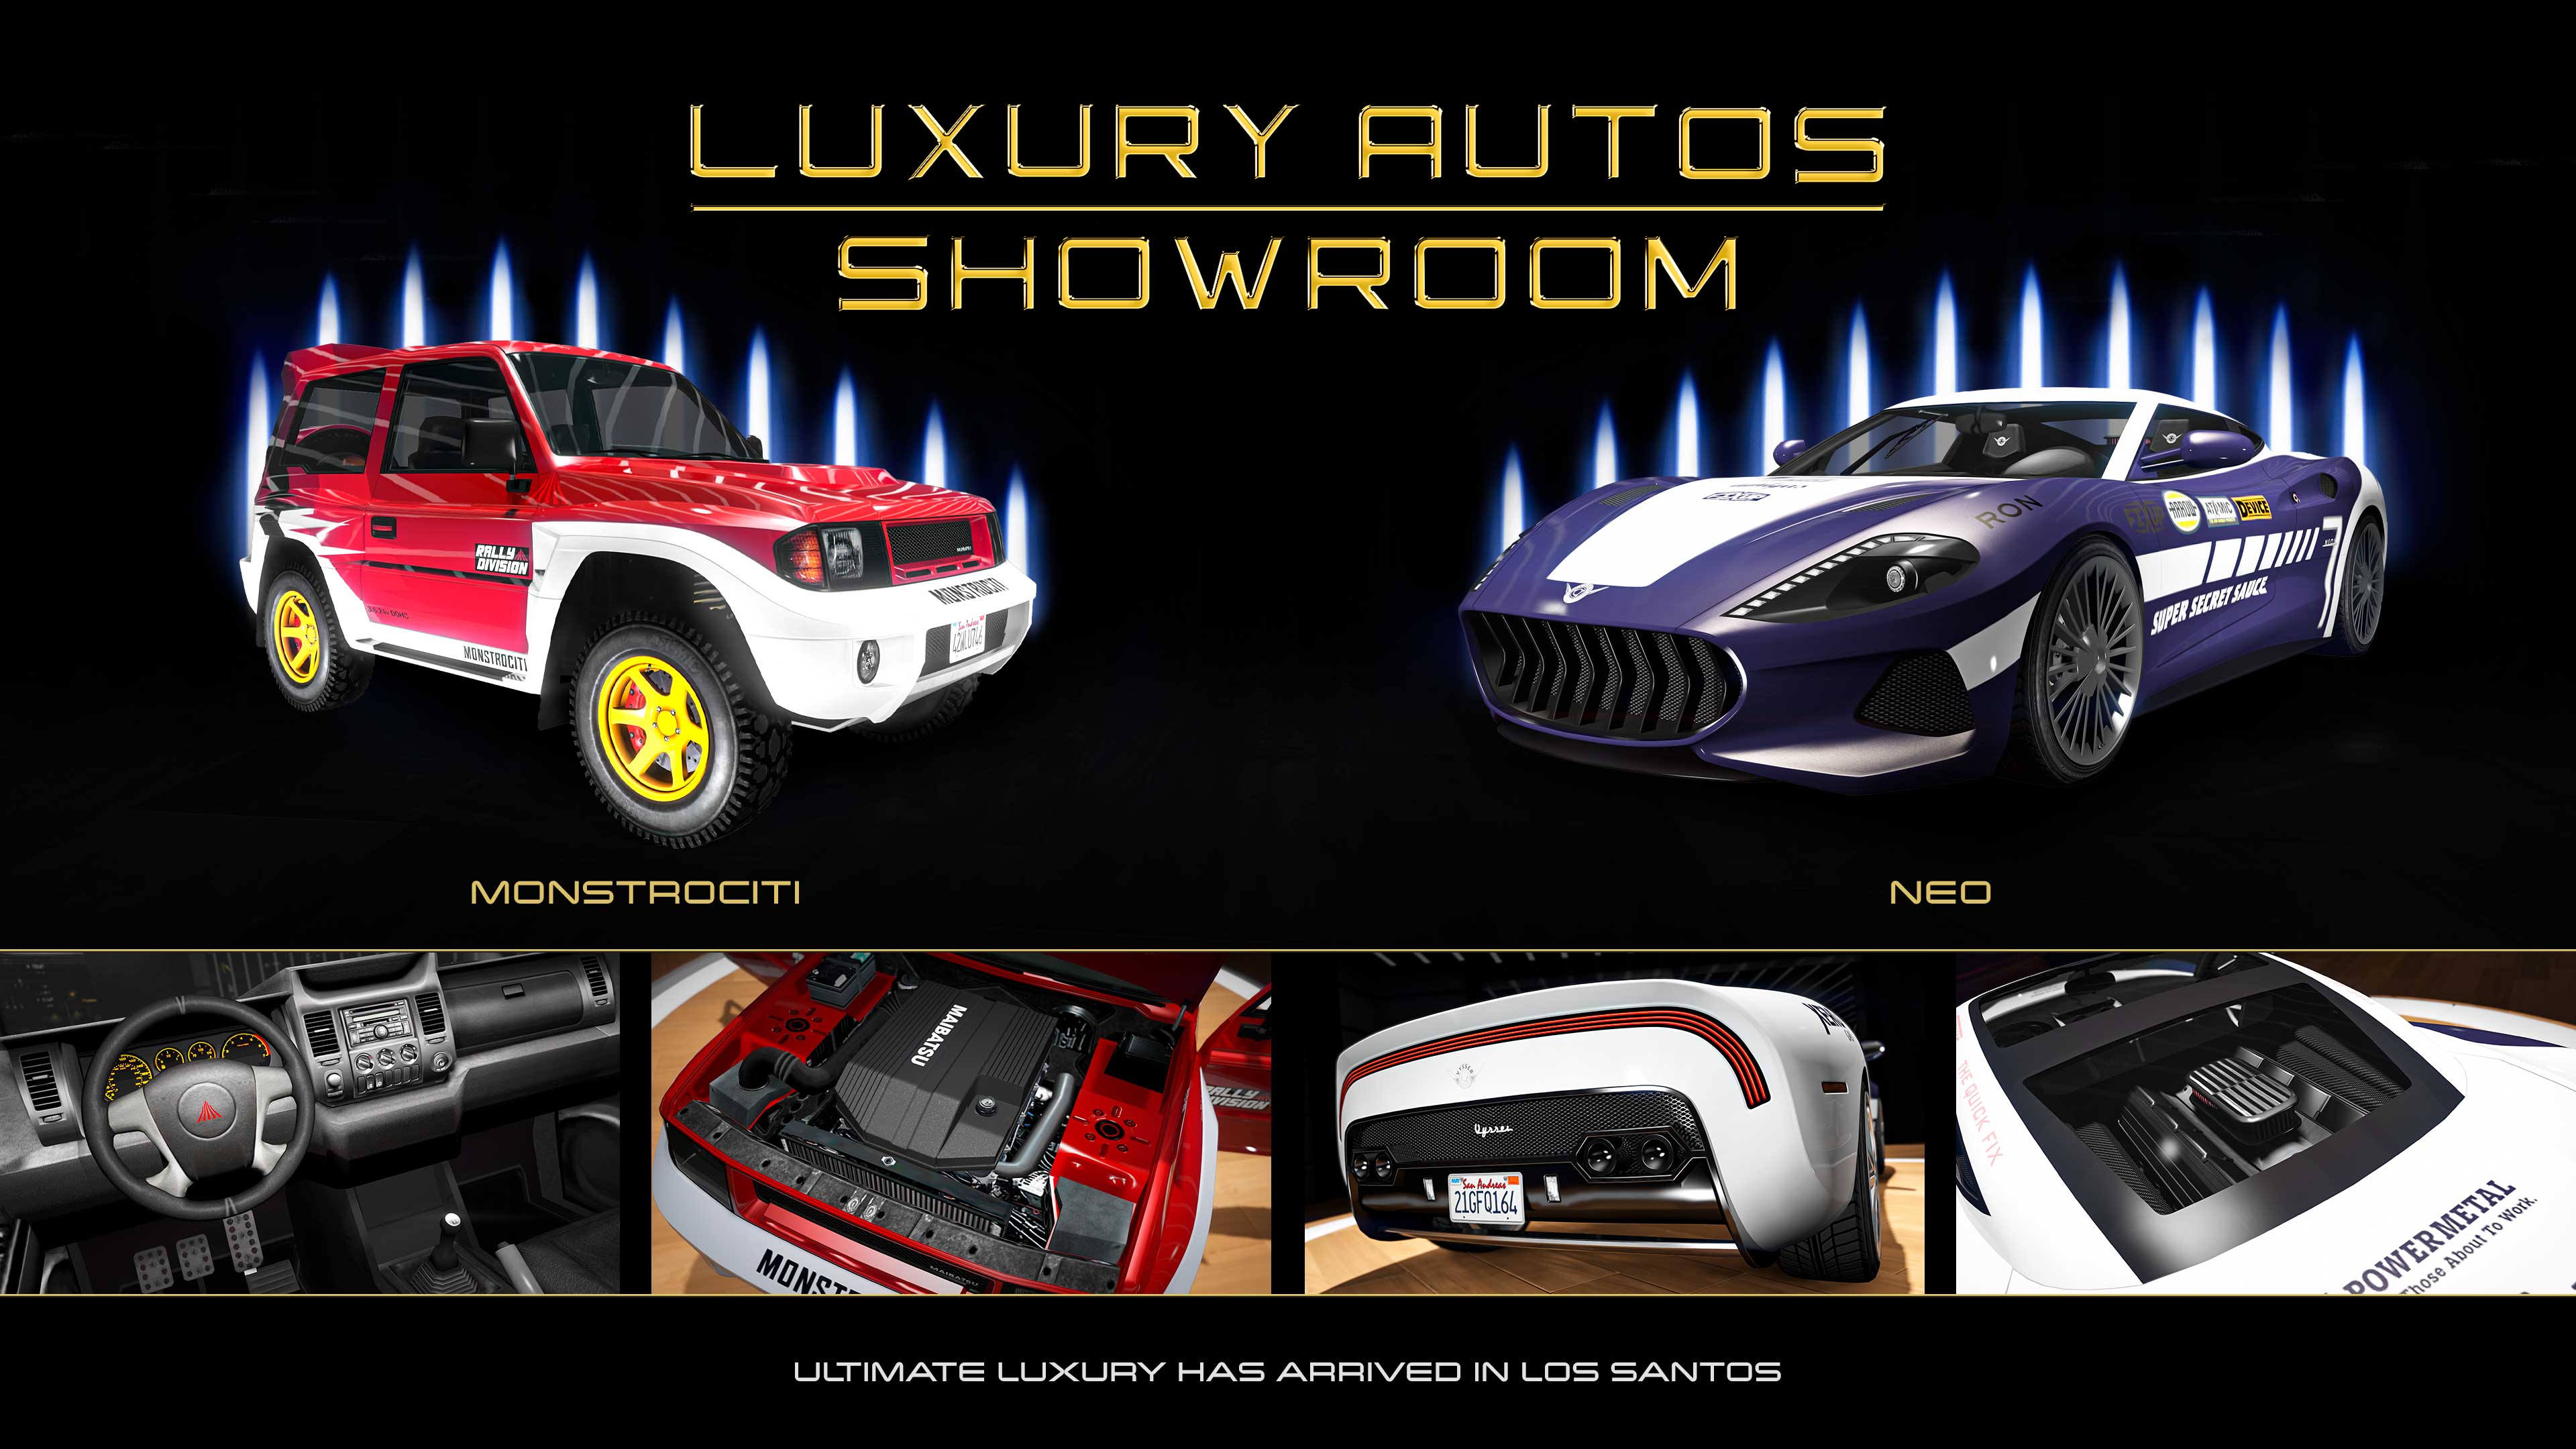 Autosalone Luxury Autos